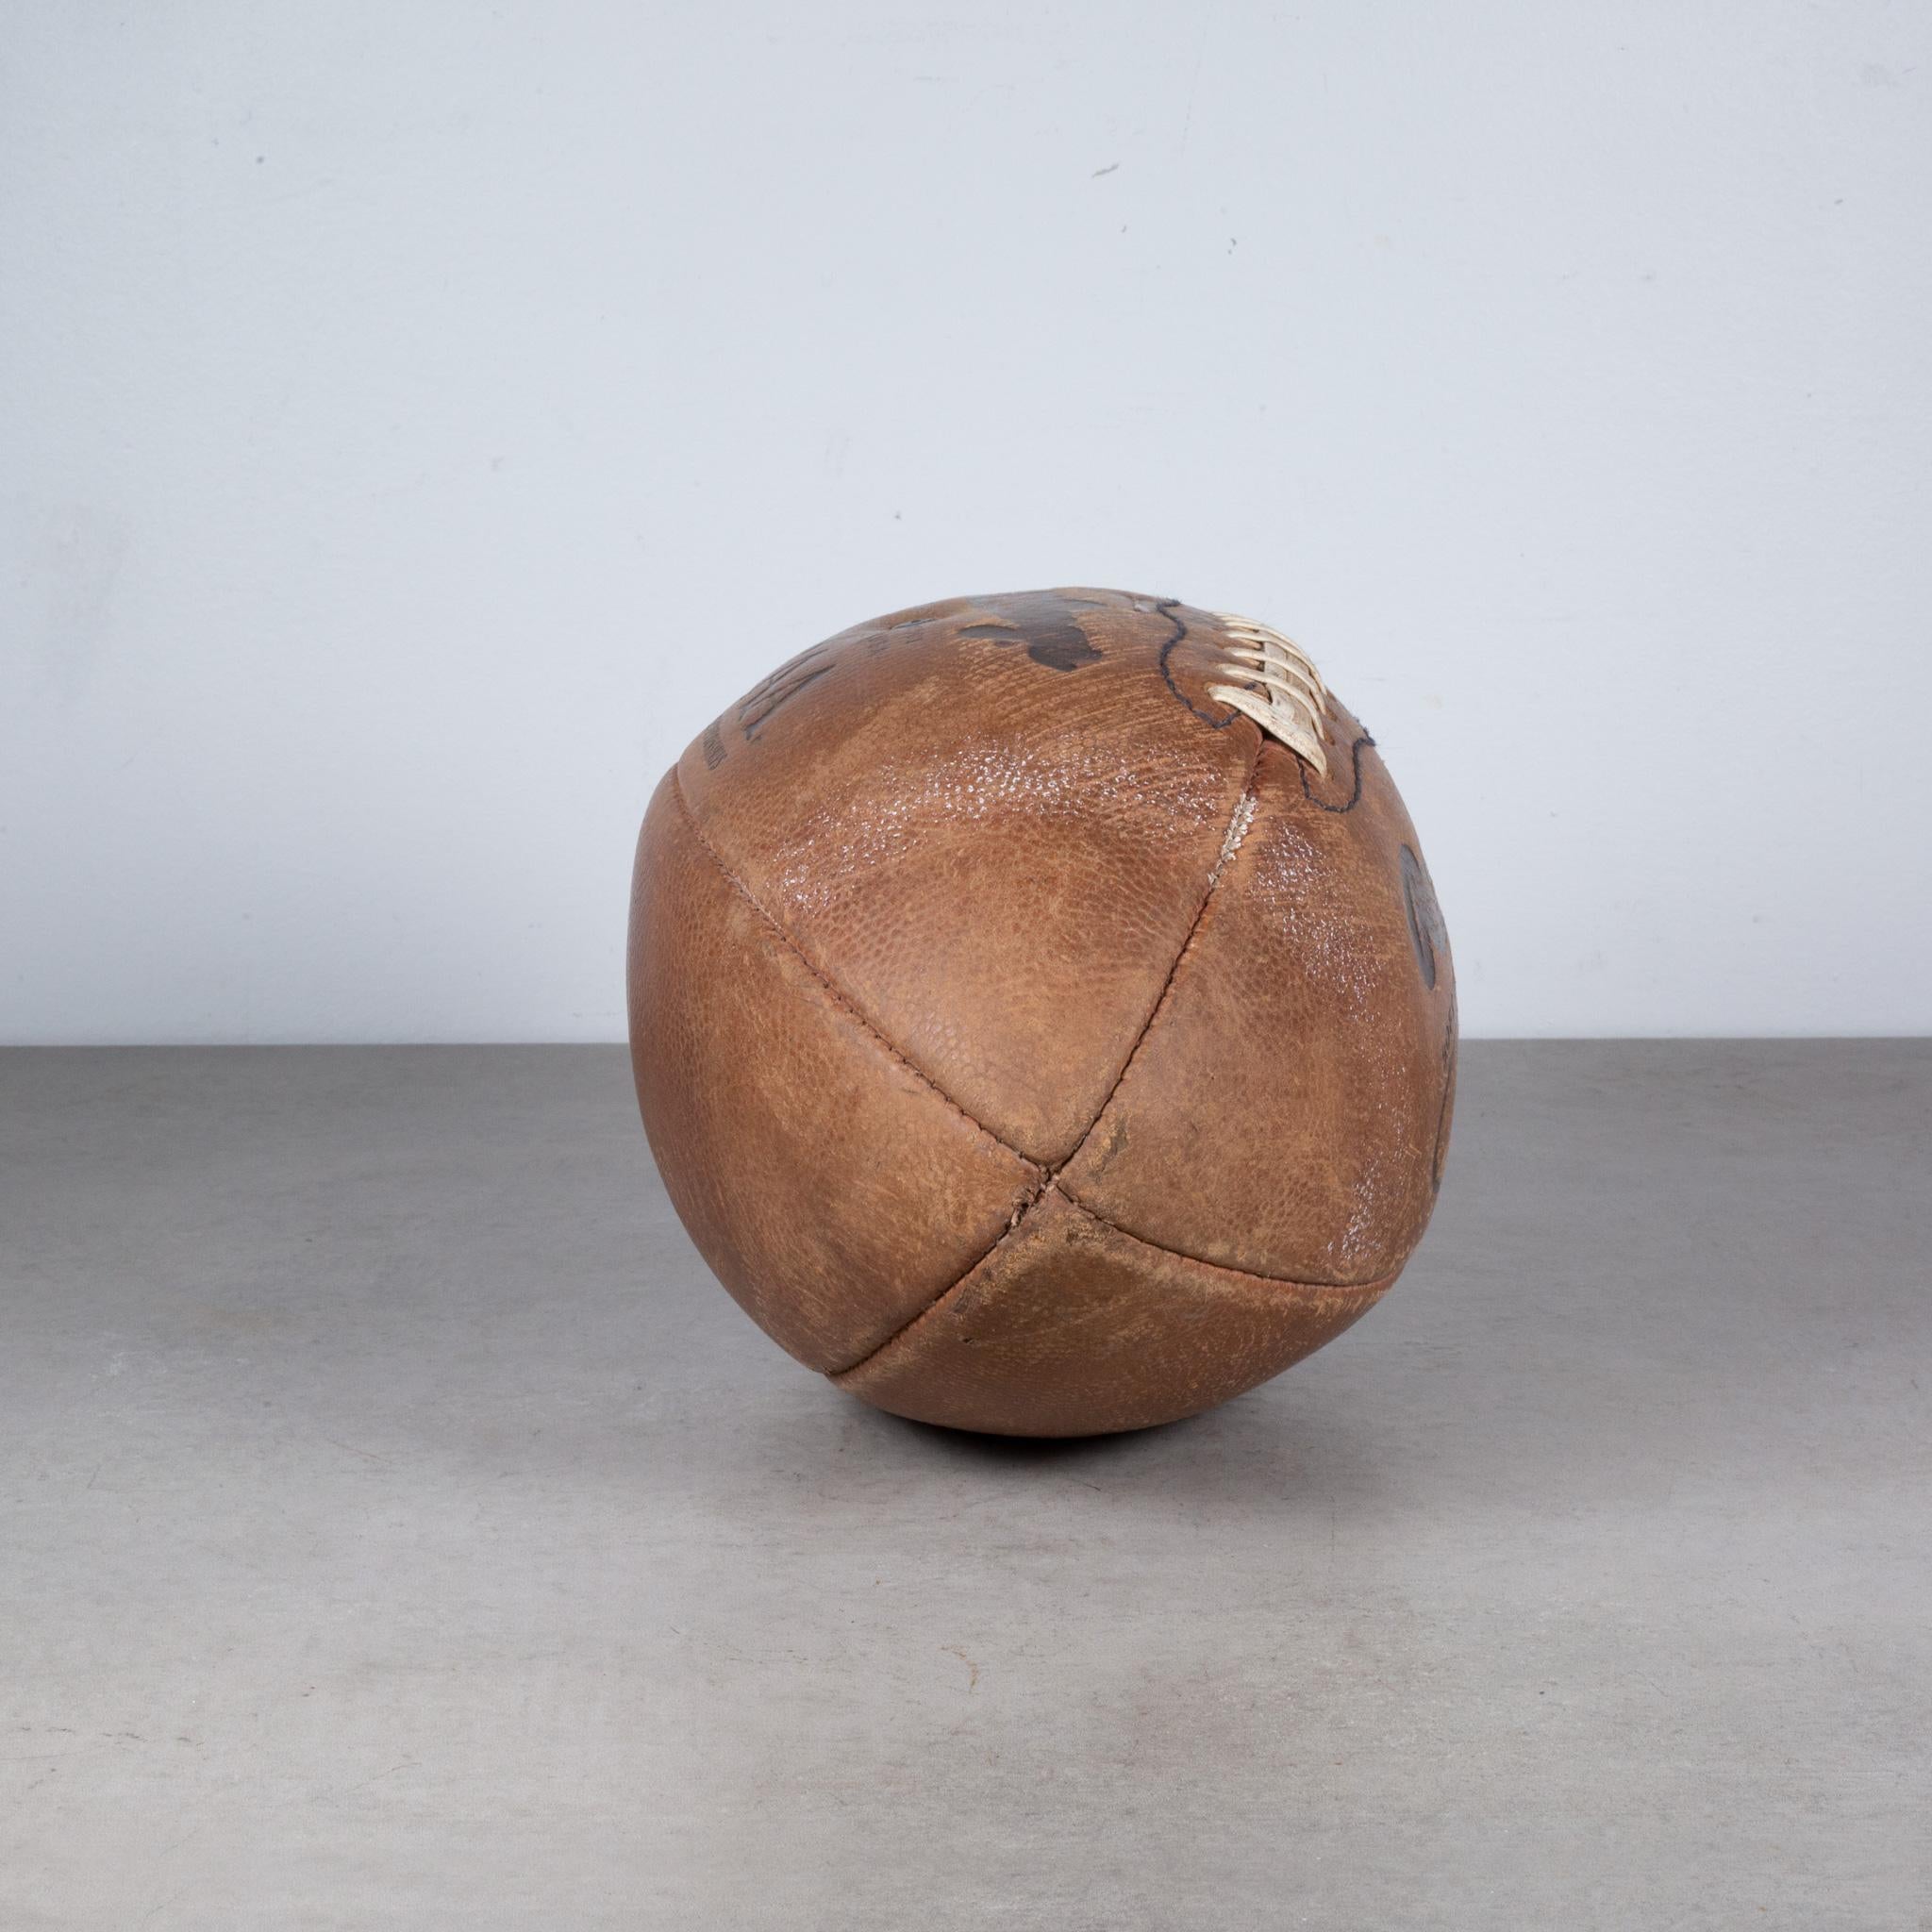 1980s football ball